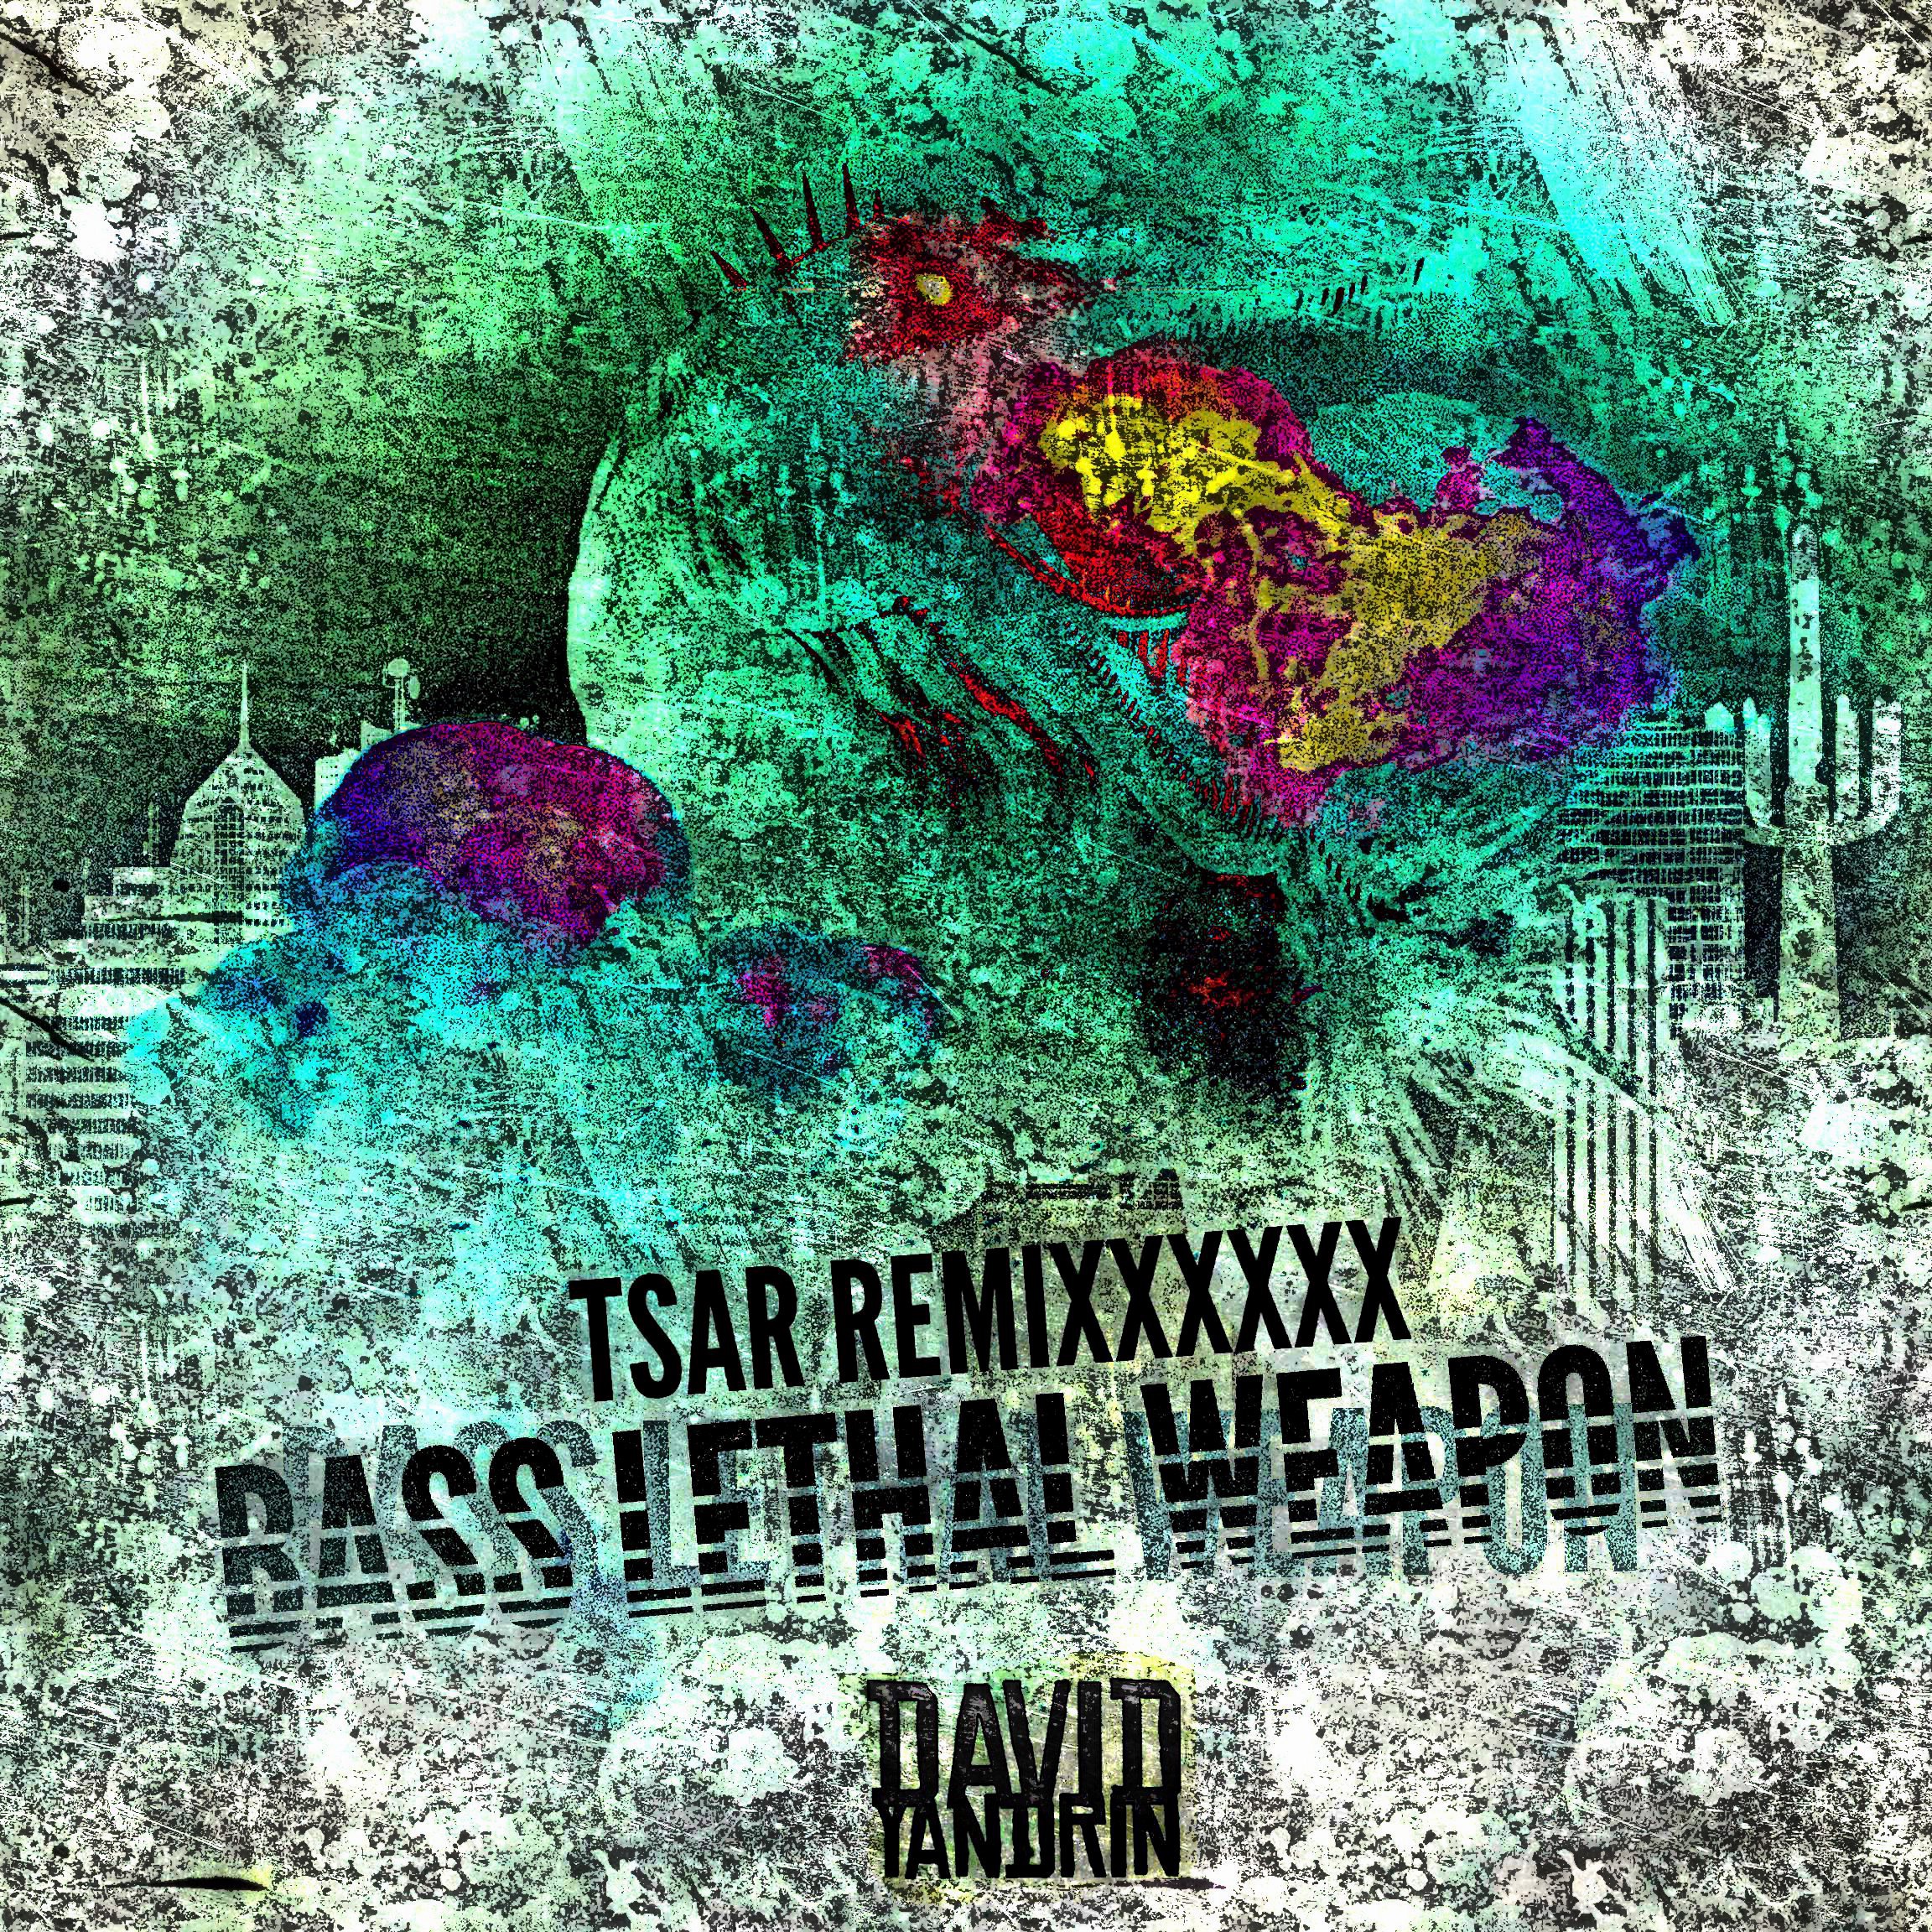 Bass  Lethal  Weapon  TSAR  Remix